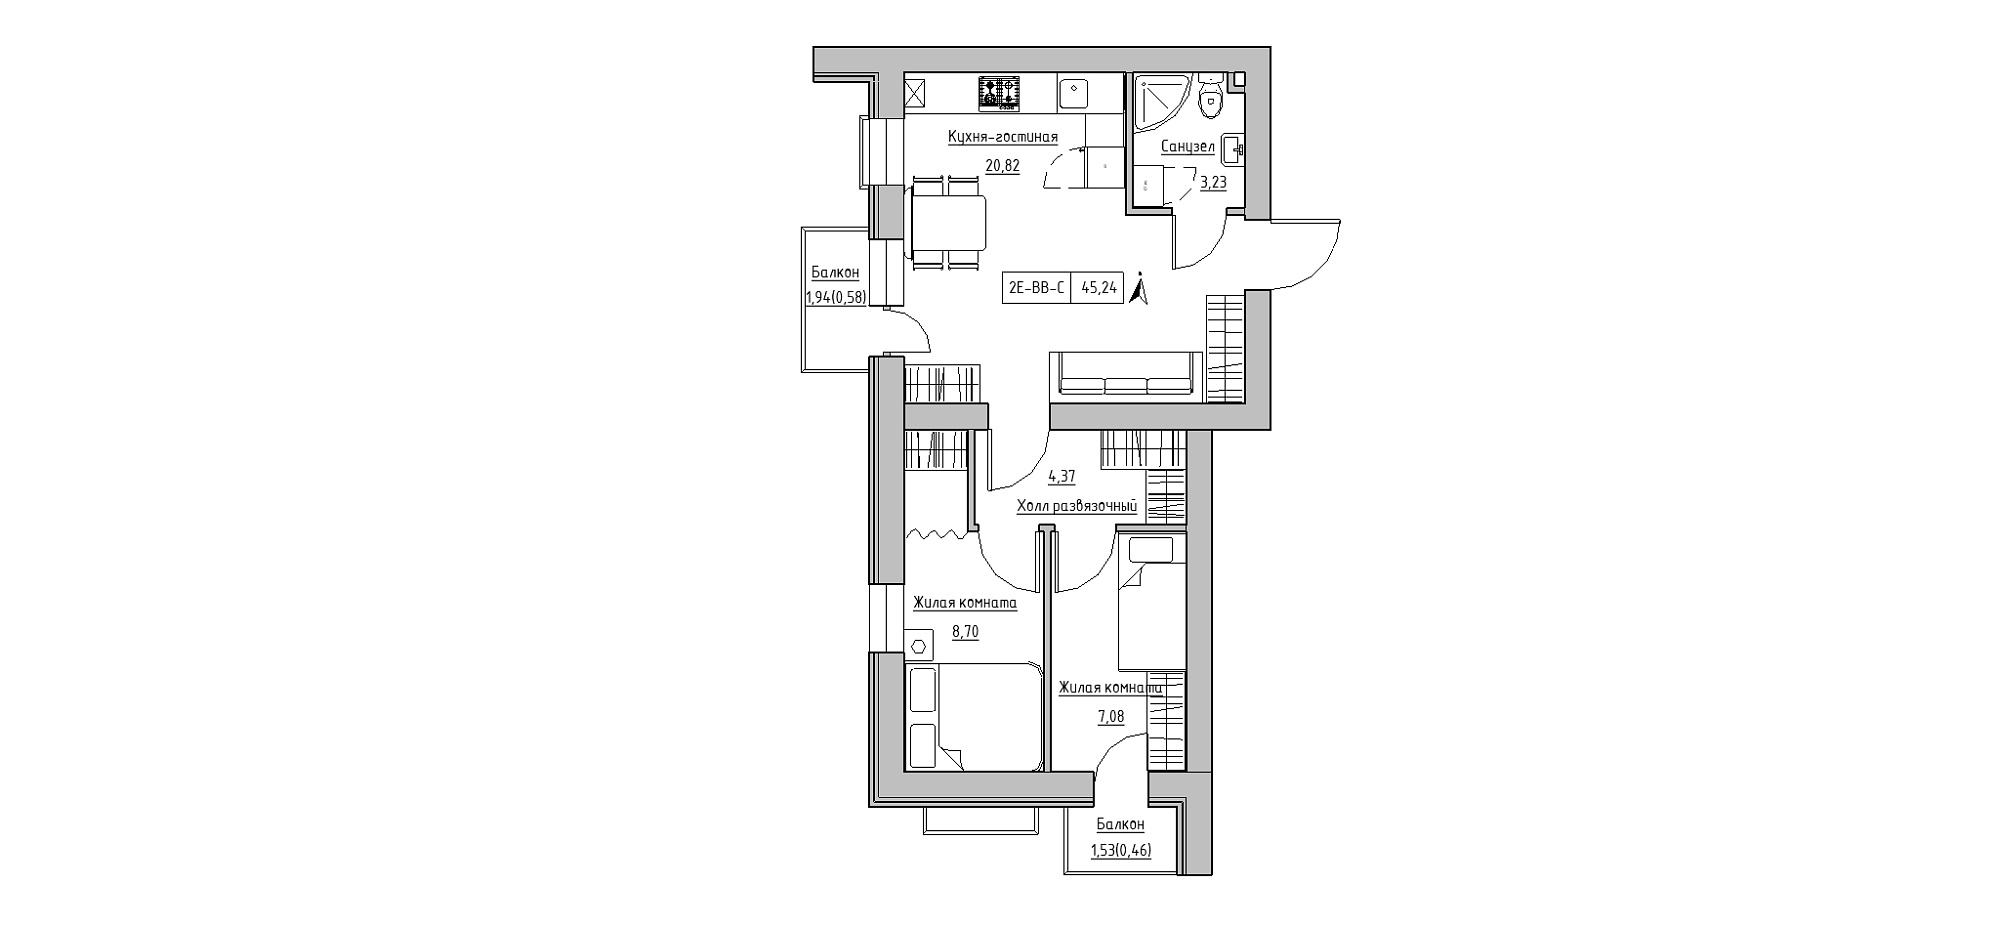 Planning 2-rm flats area 45.24m2, KS-020-05/0011.